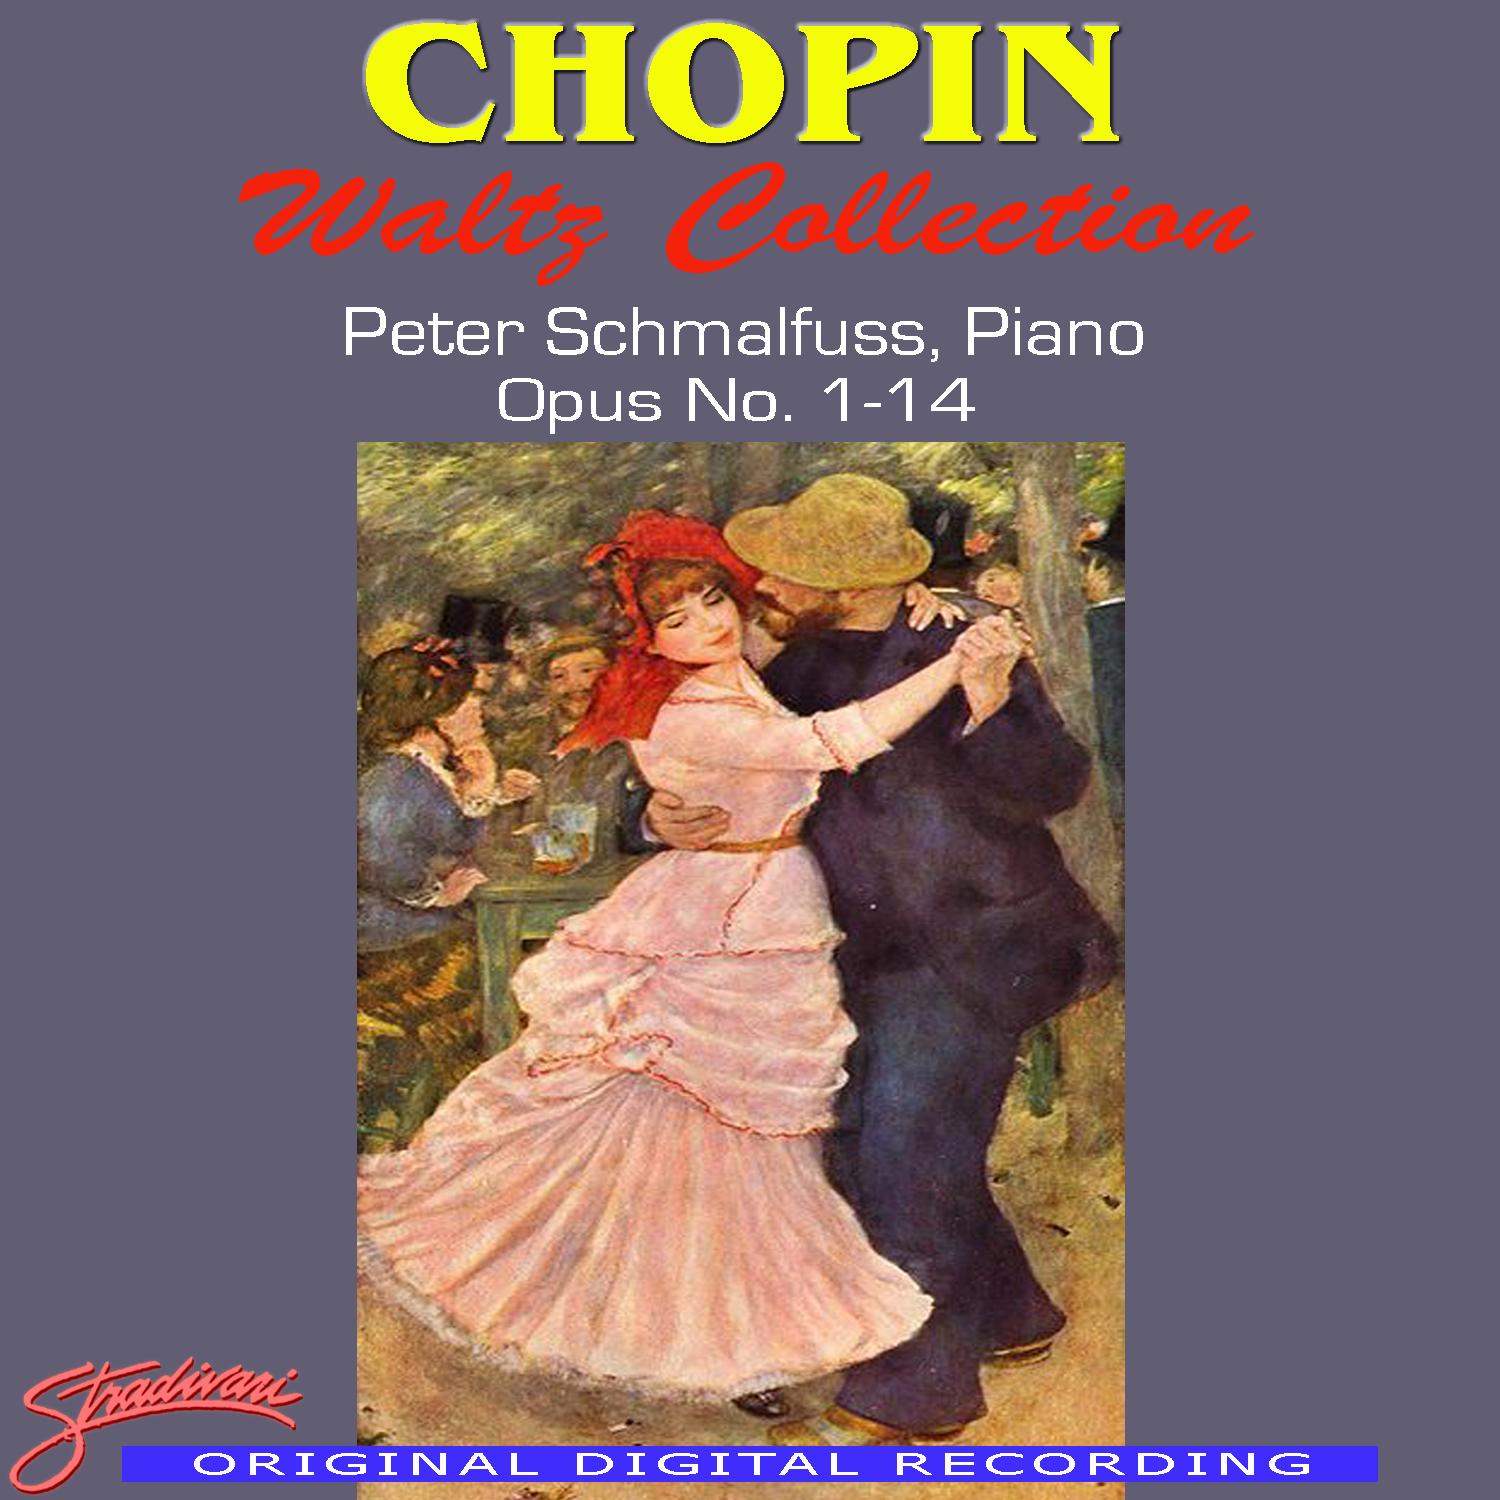 Chopin Waltz Collection, Opus No. 1-14